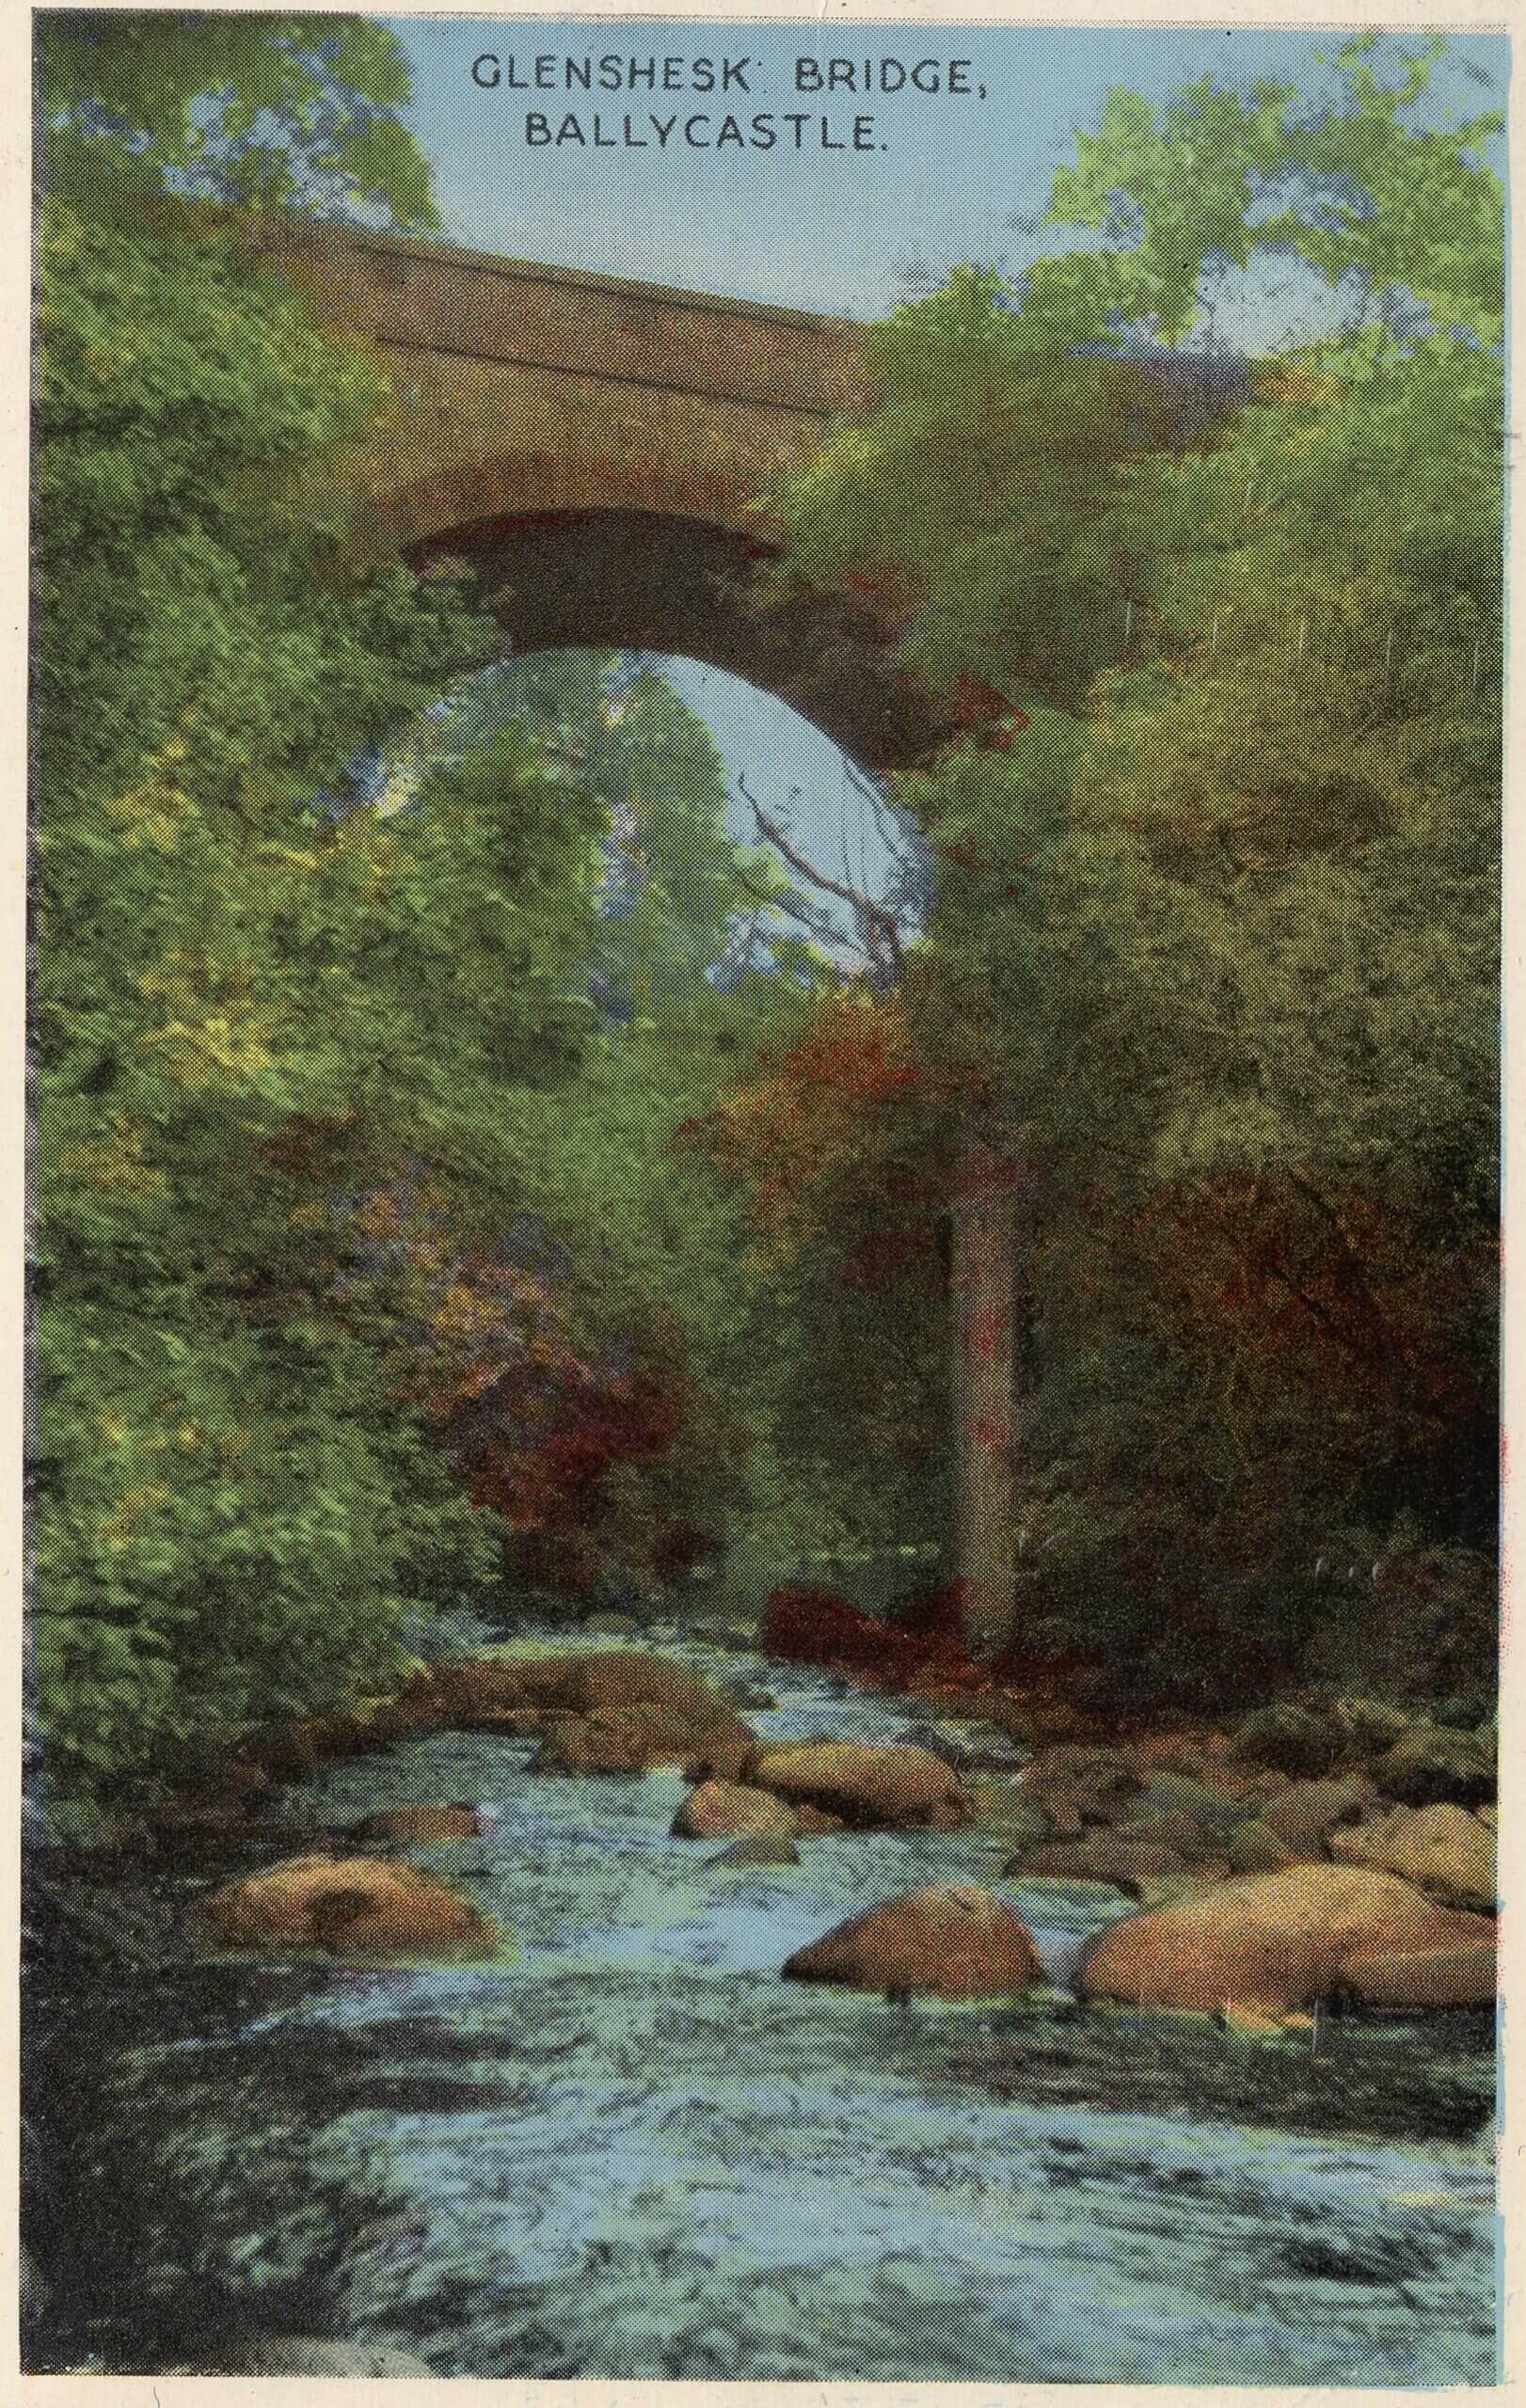 Old postcard of Glenshesk Bridge, Ballycastle, c1900's